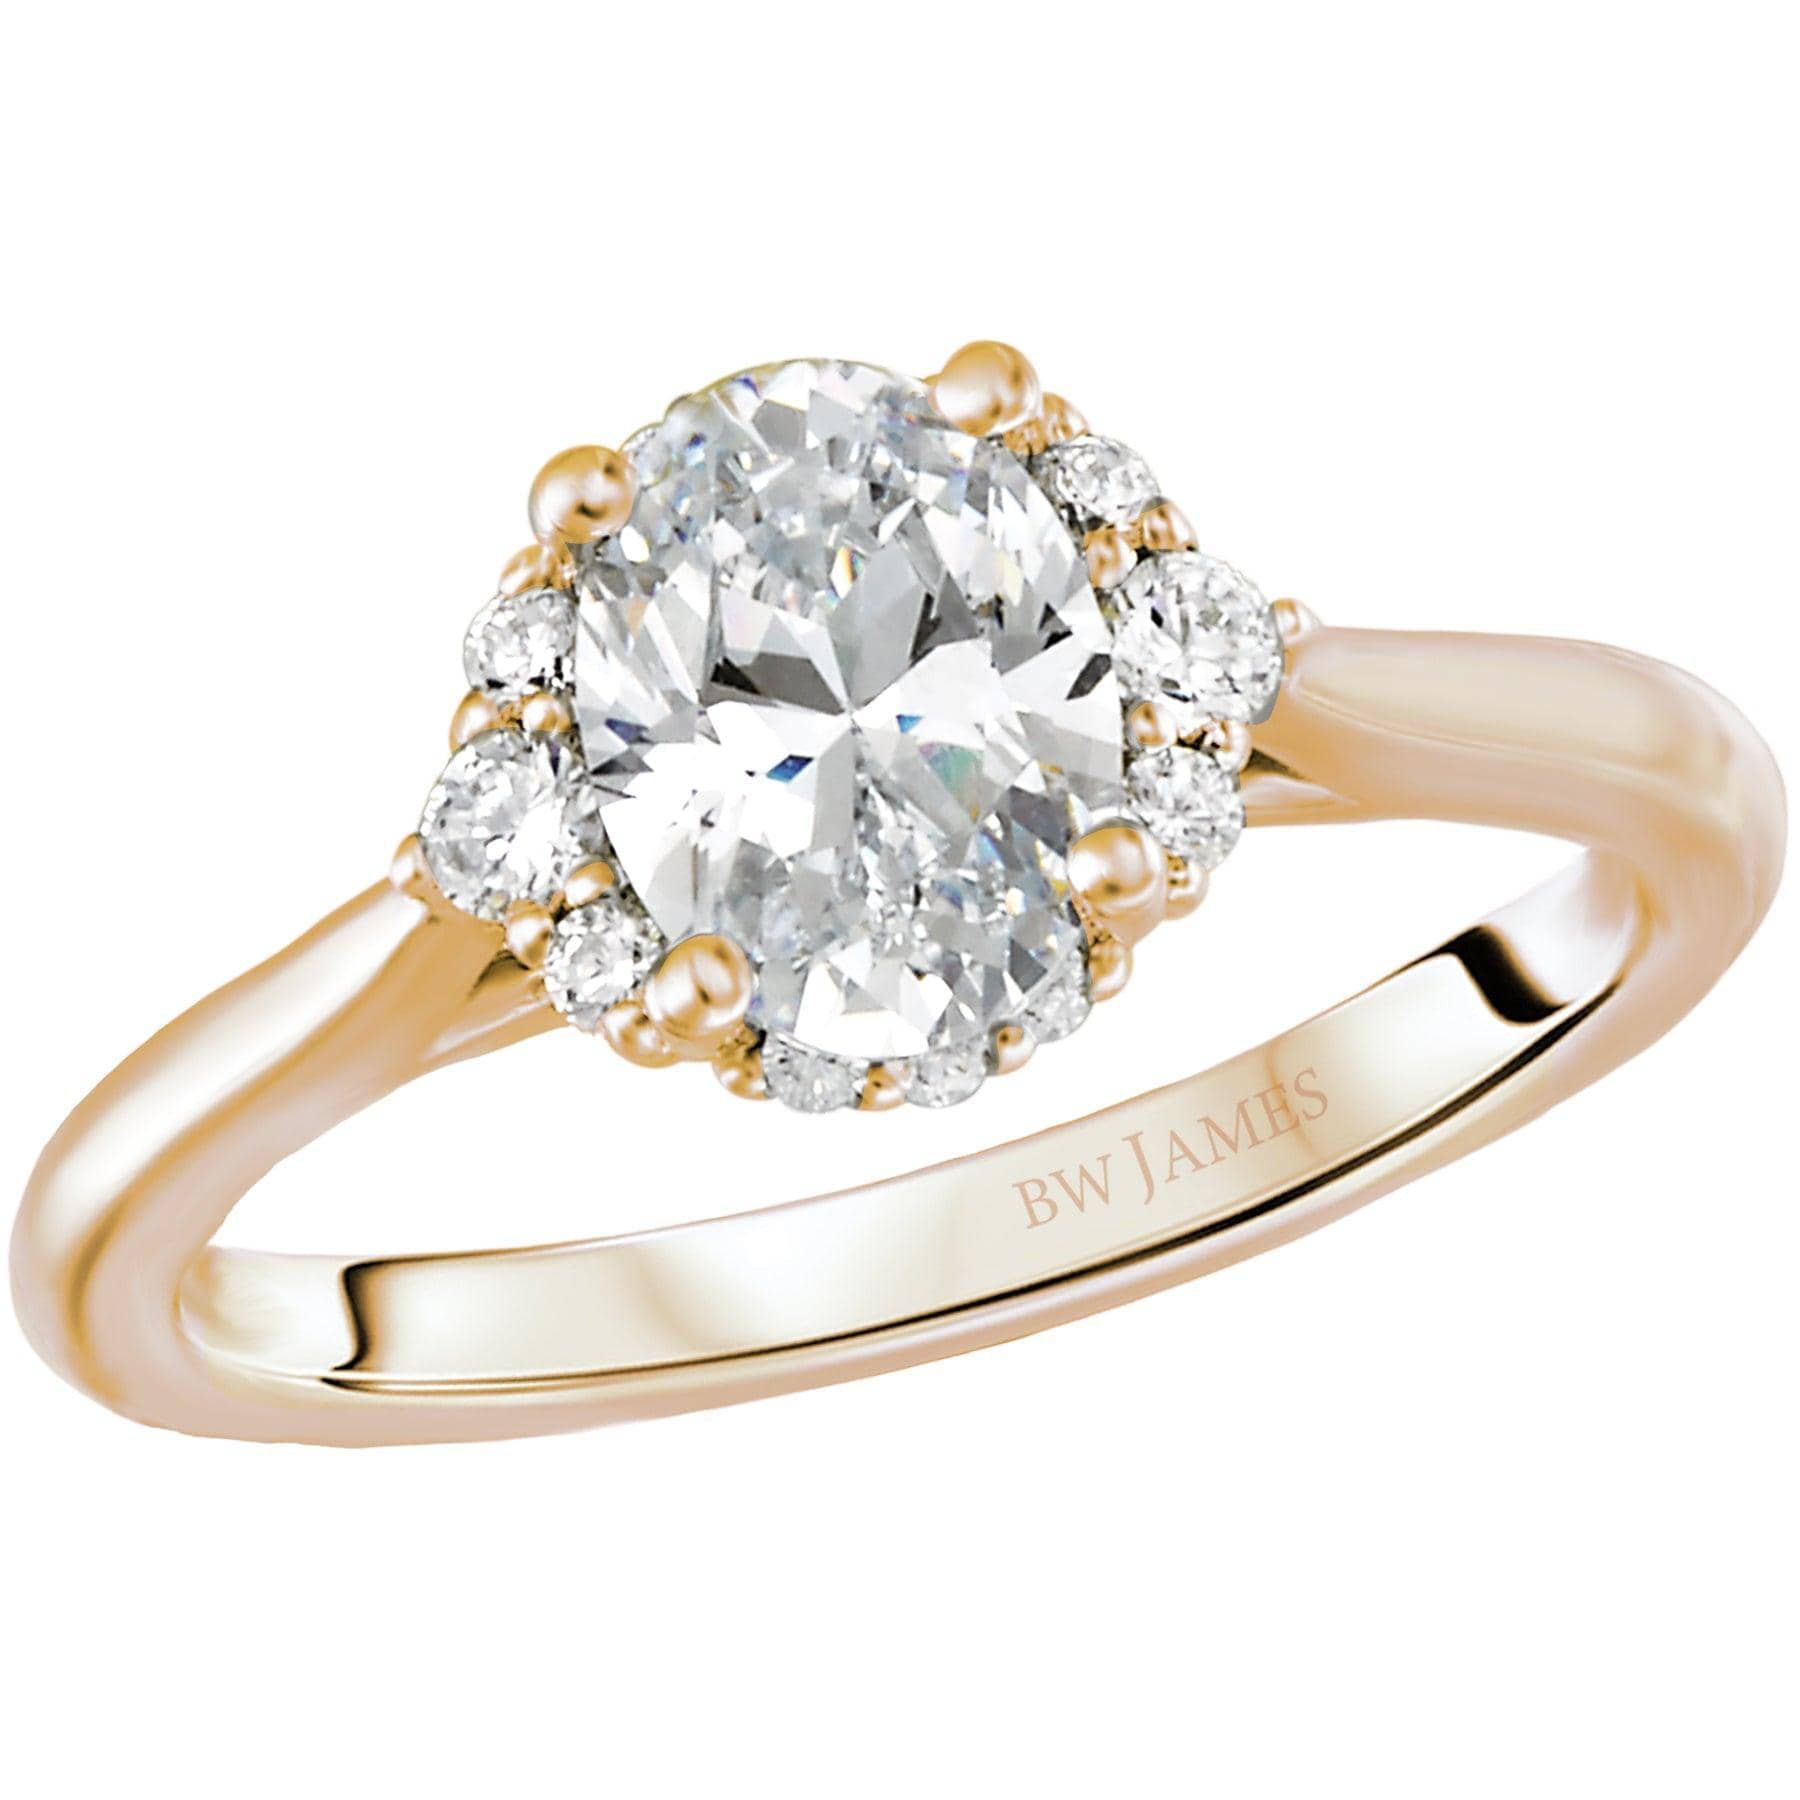 BW JAMES Engagement Rings "The Elle" Classic Oval Shape Semi-Mount Diamond Ring